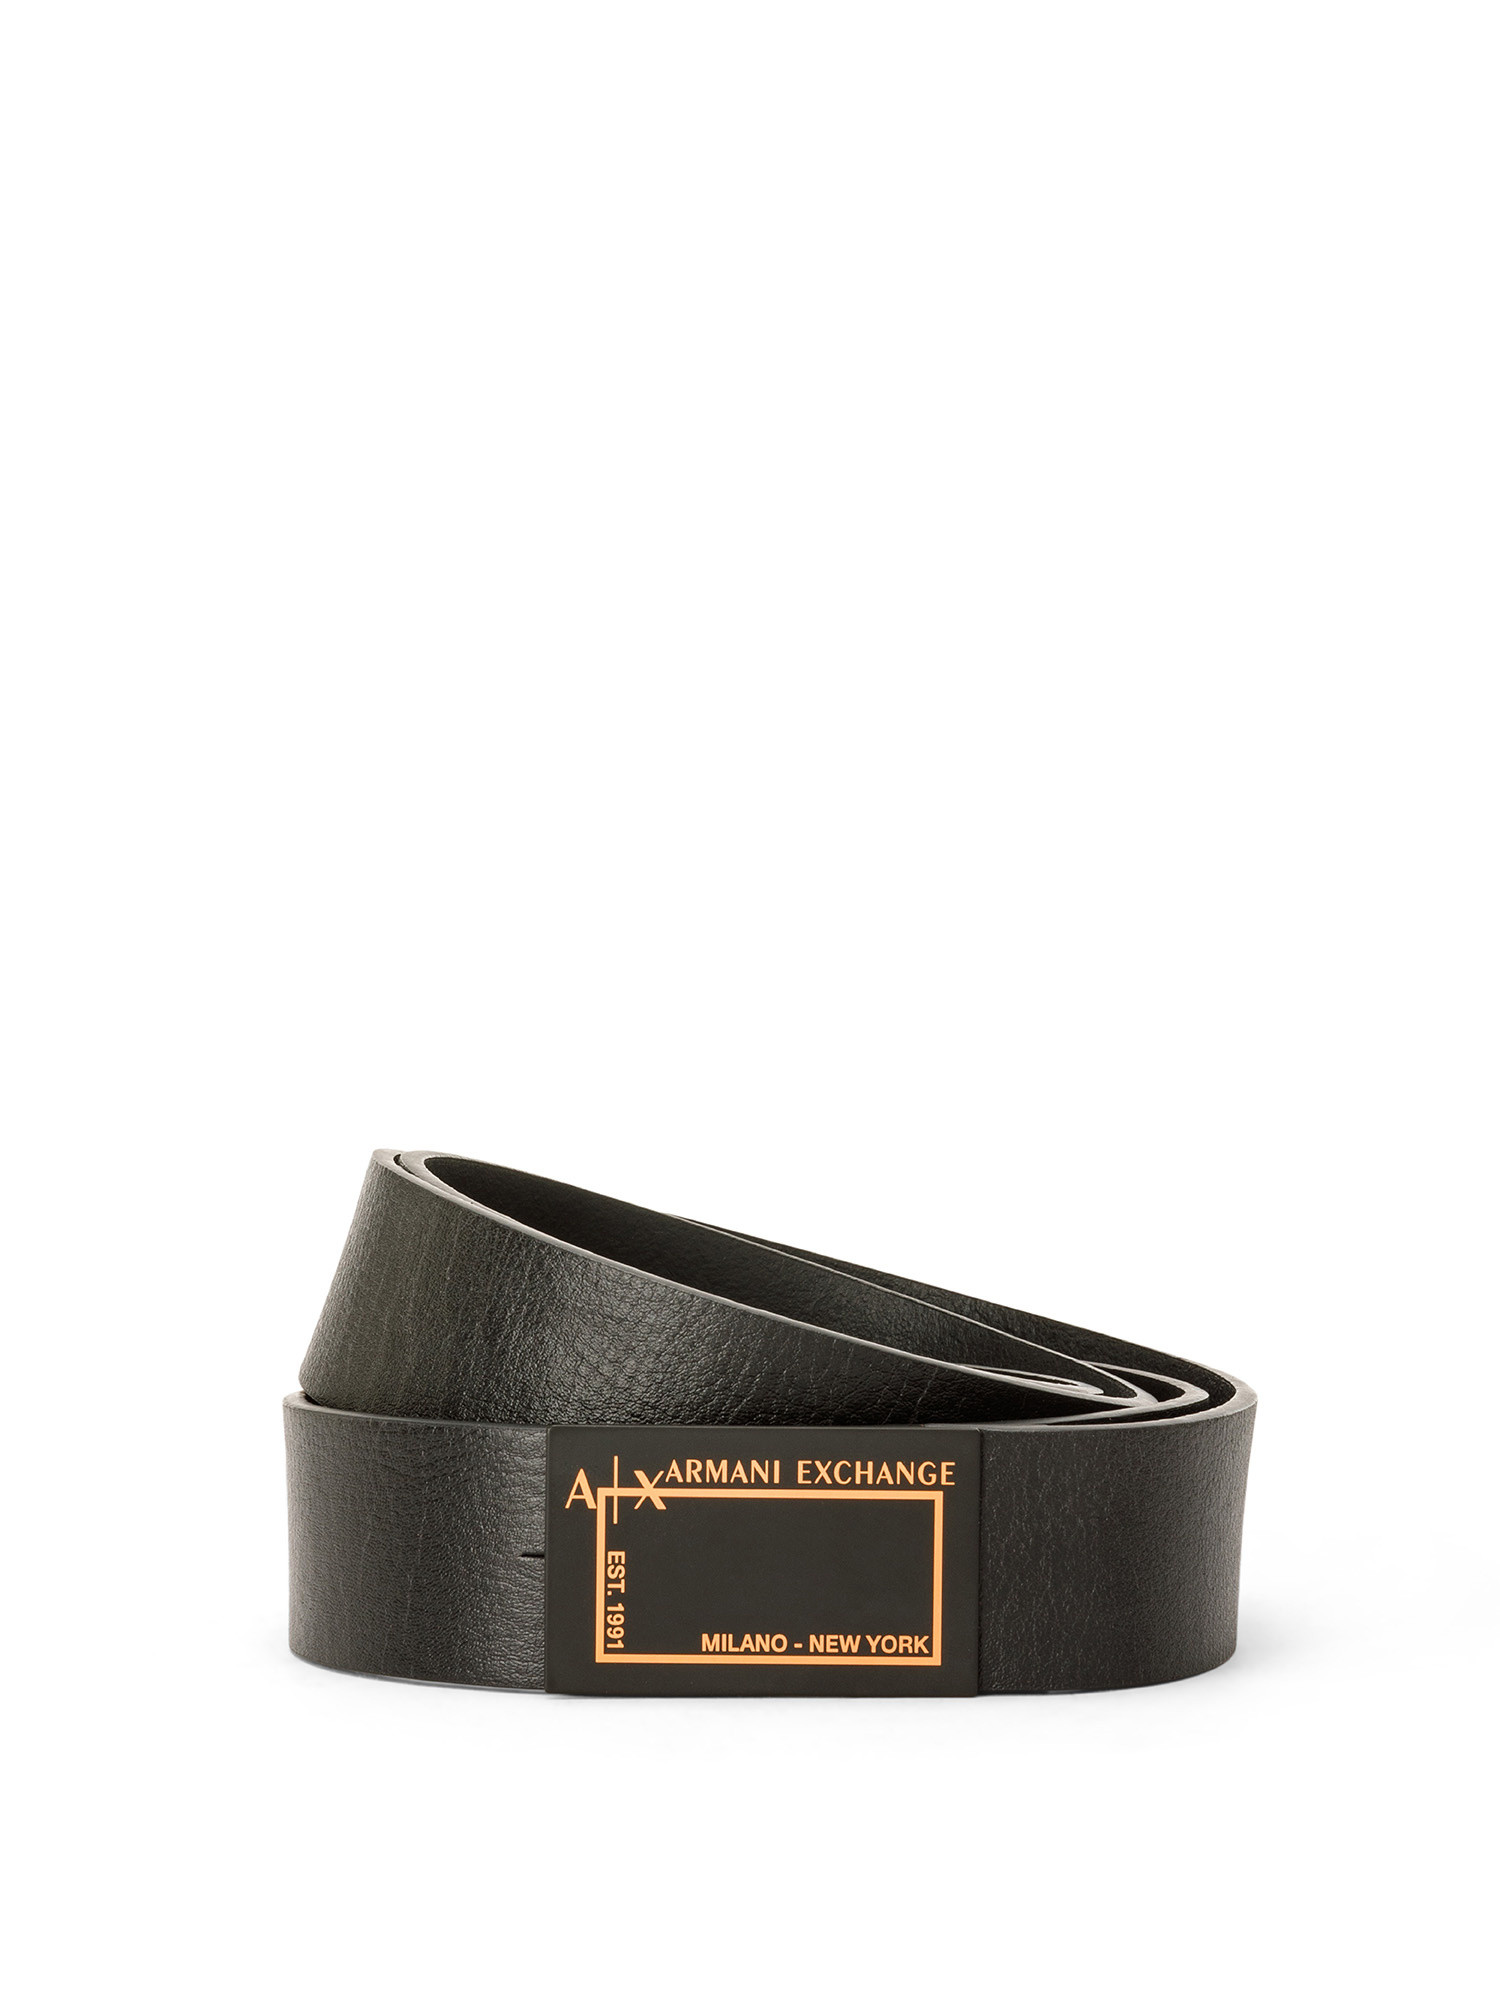 Armani Exchange - Cintura in pelle con fibbia logata, Nero, large image number 0